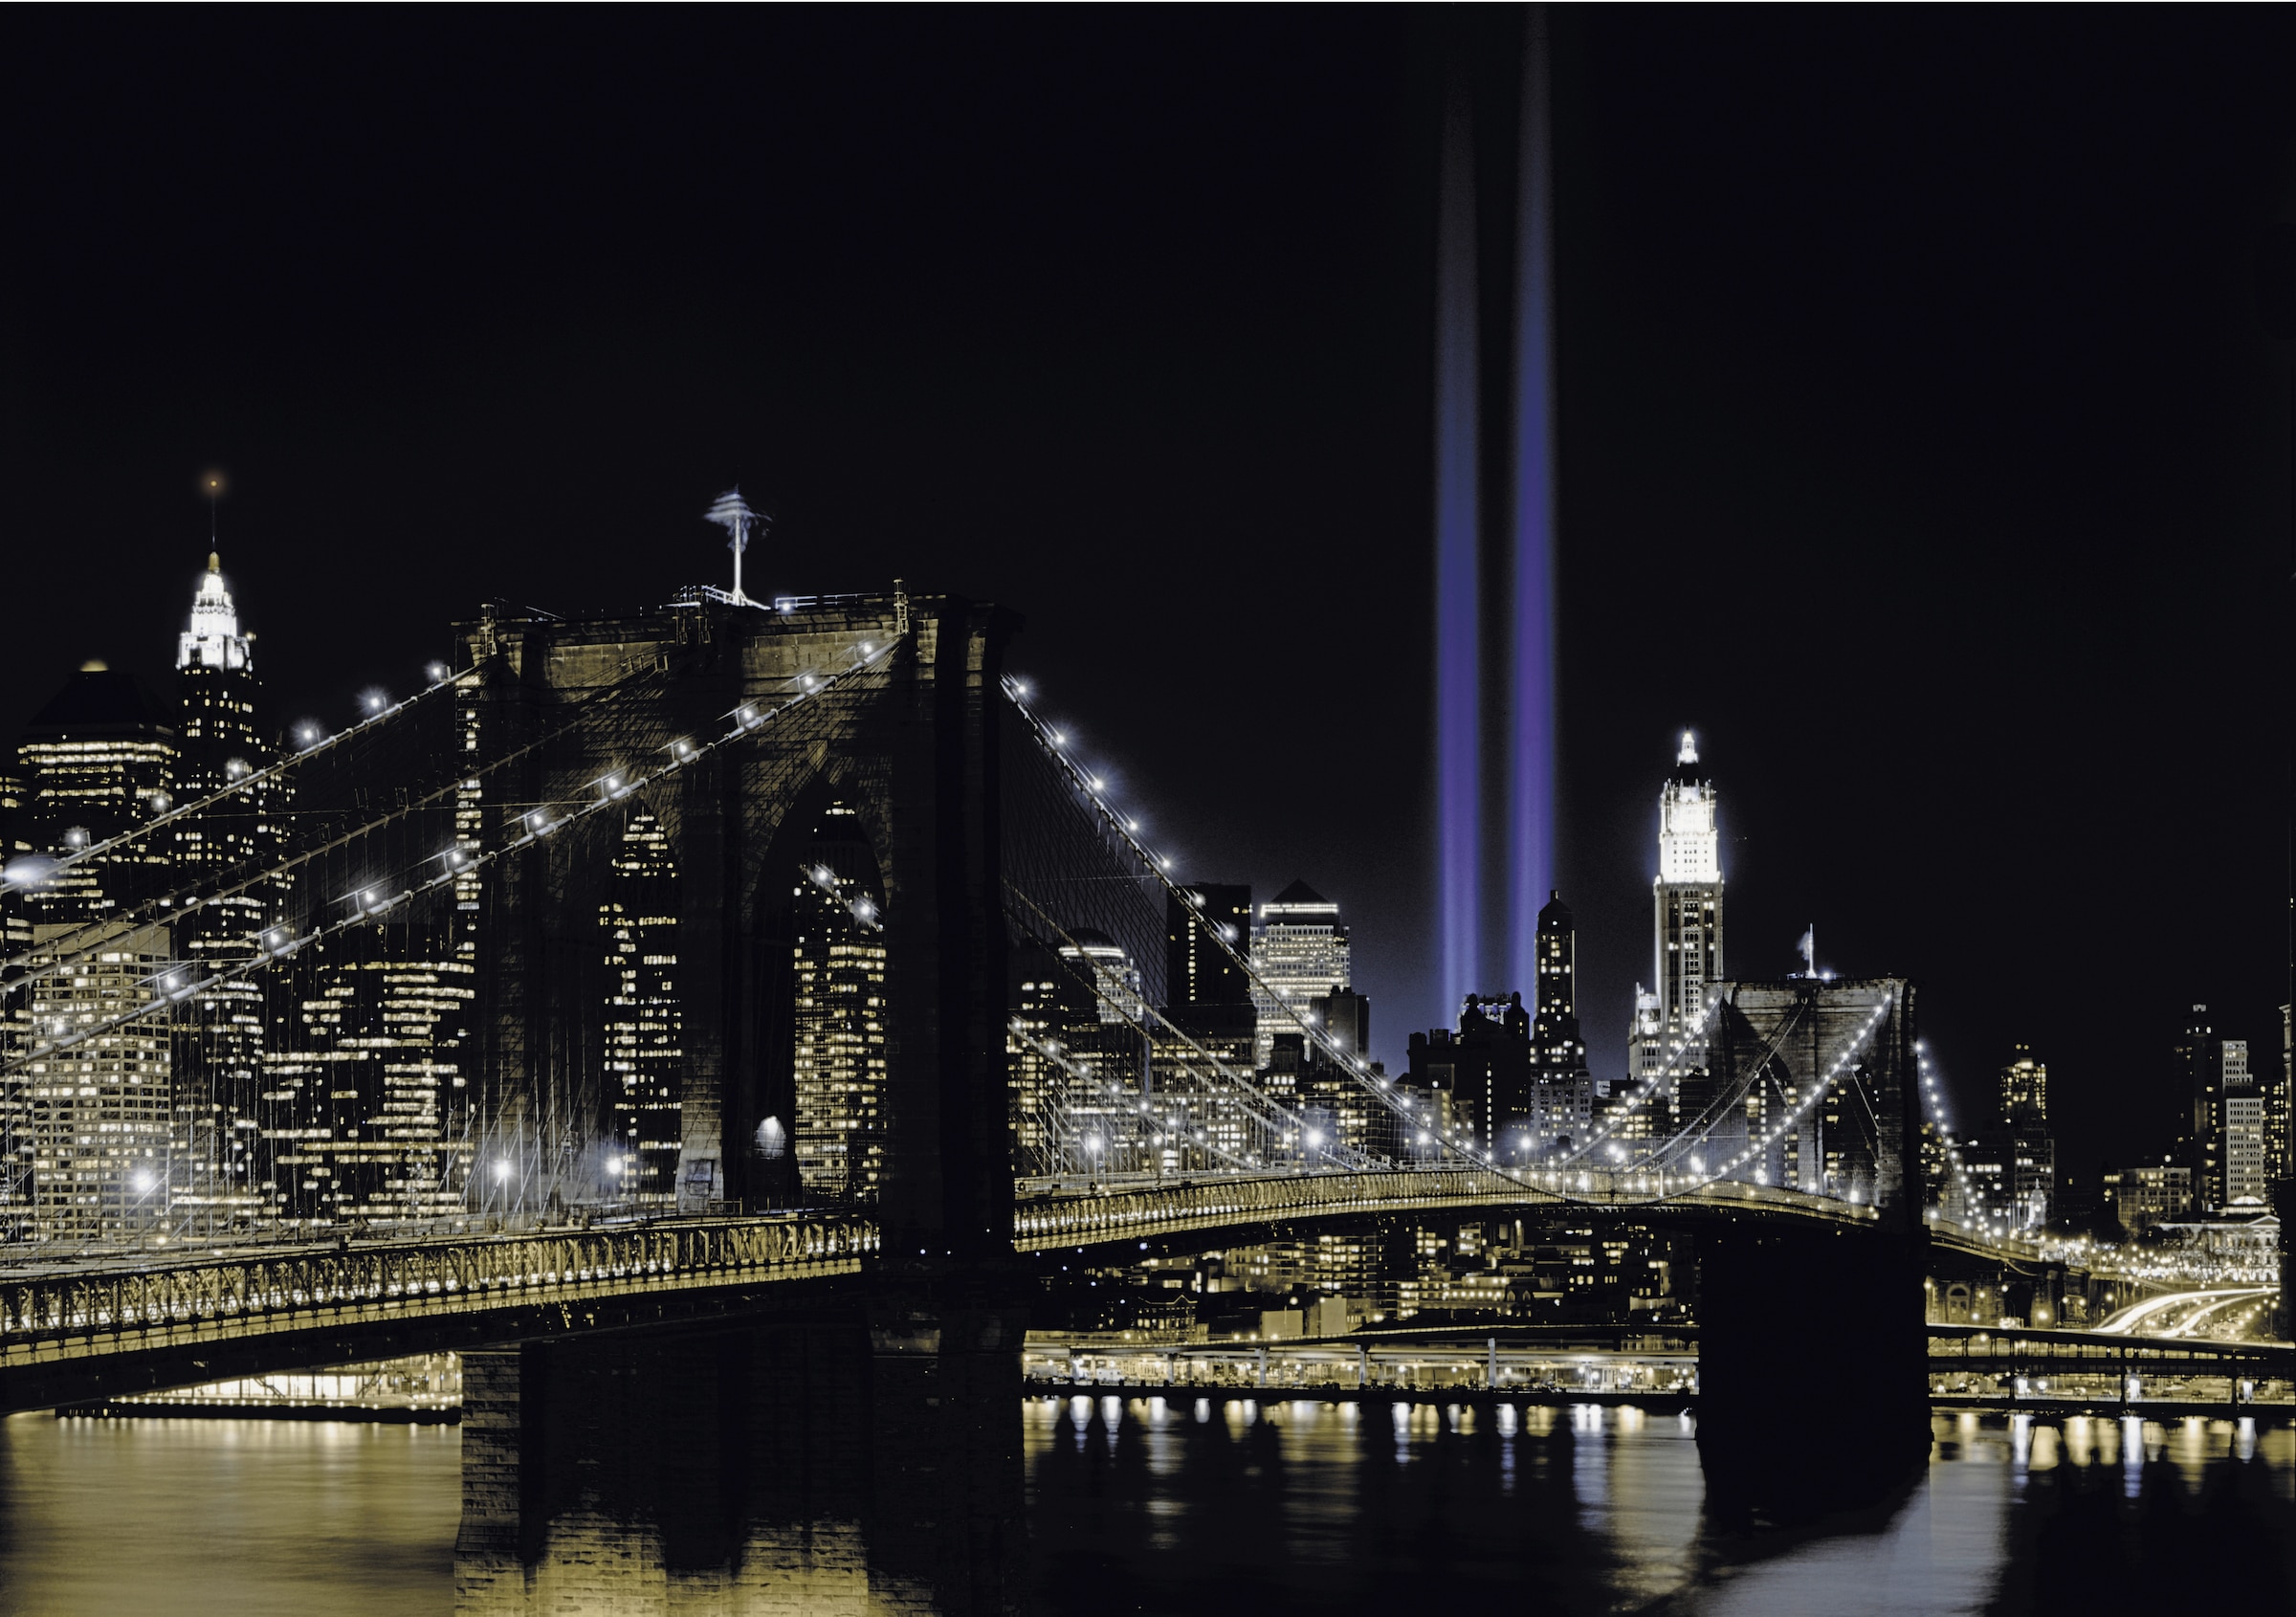 Fototapete »New York by night«